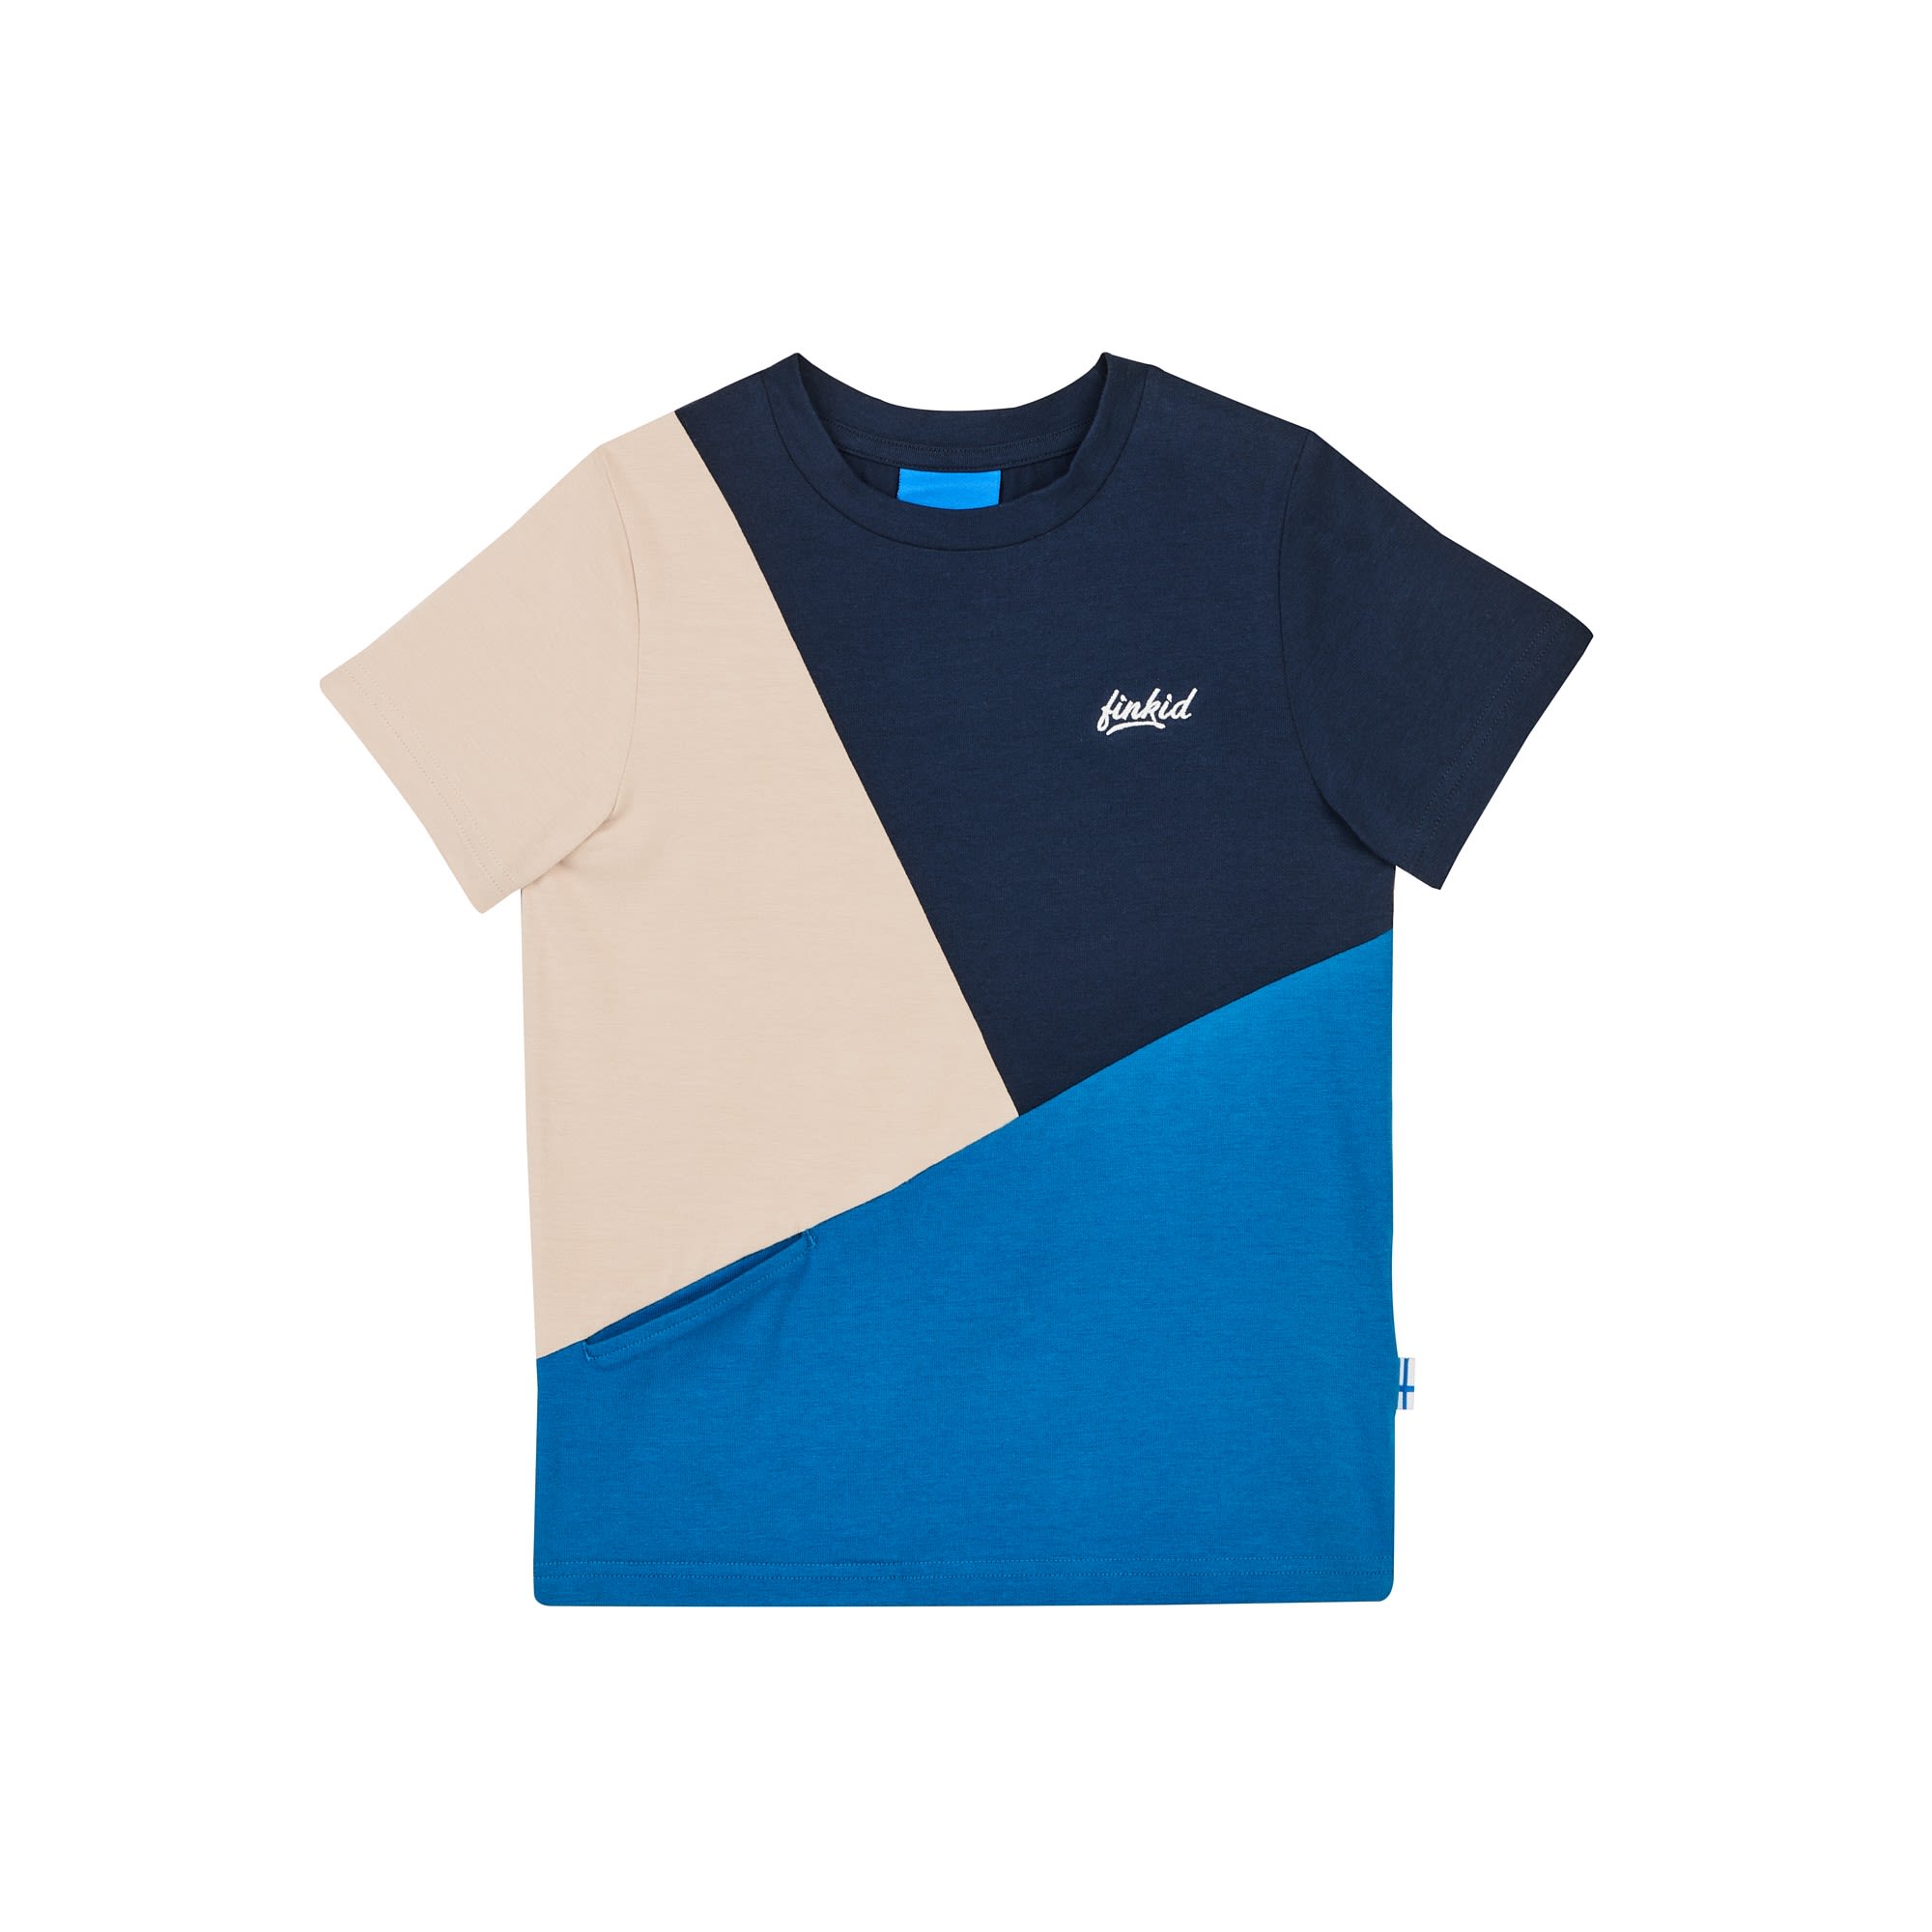 Finkid Ankkuri (Vorgngermodell) Colorblock - Blau - Weiss- Kurzarm-Shirts- Grsse 80 - 90 - Farbe Navy - Nautic